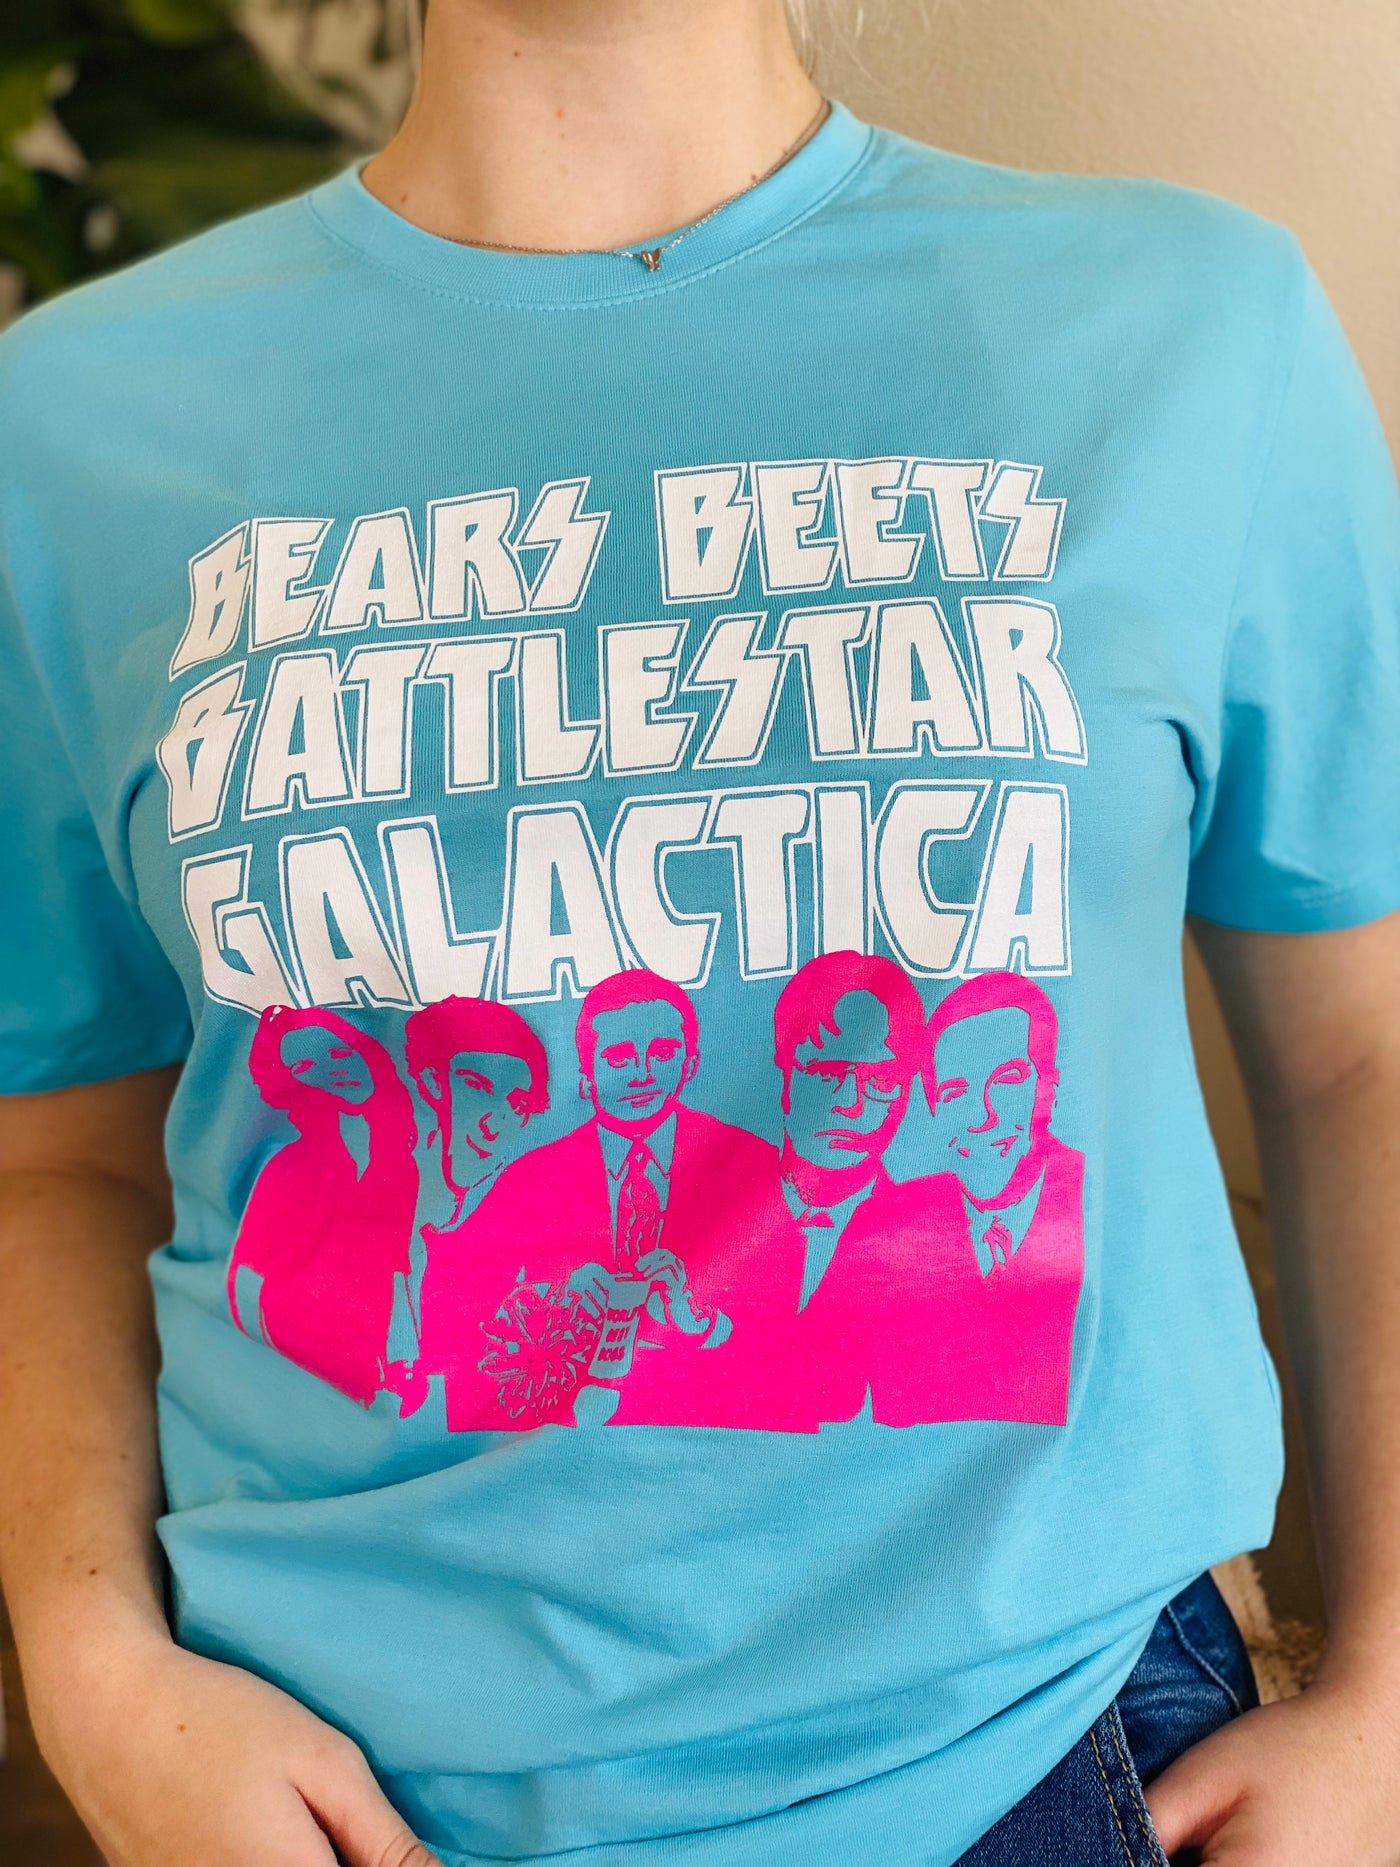 Bears, Beets, Battlestar Galactica Office Inspired Tee